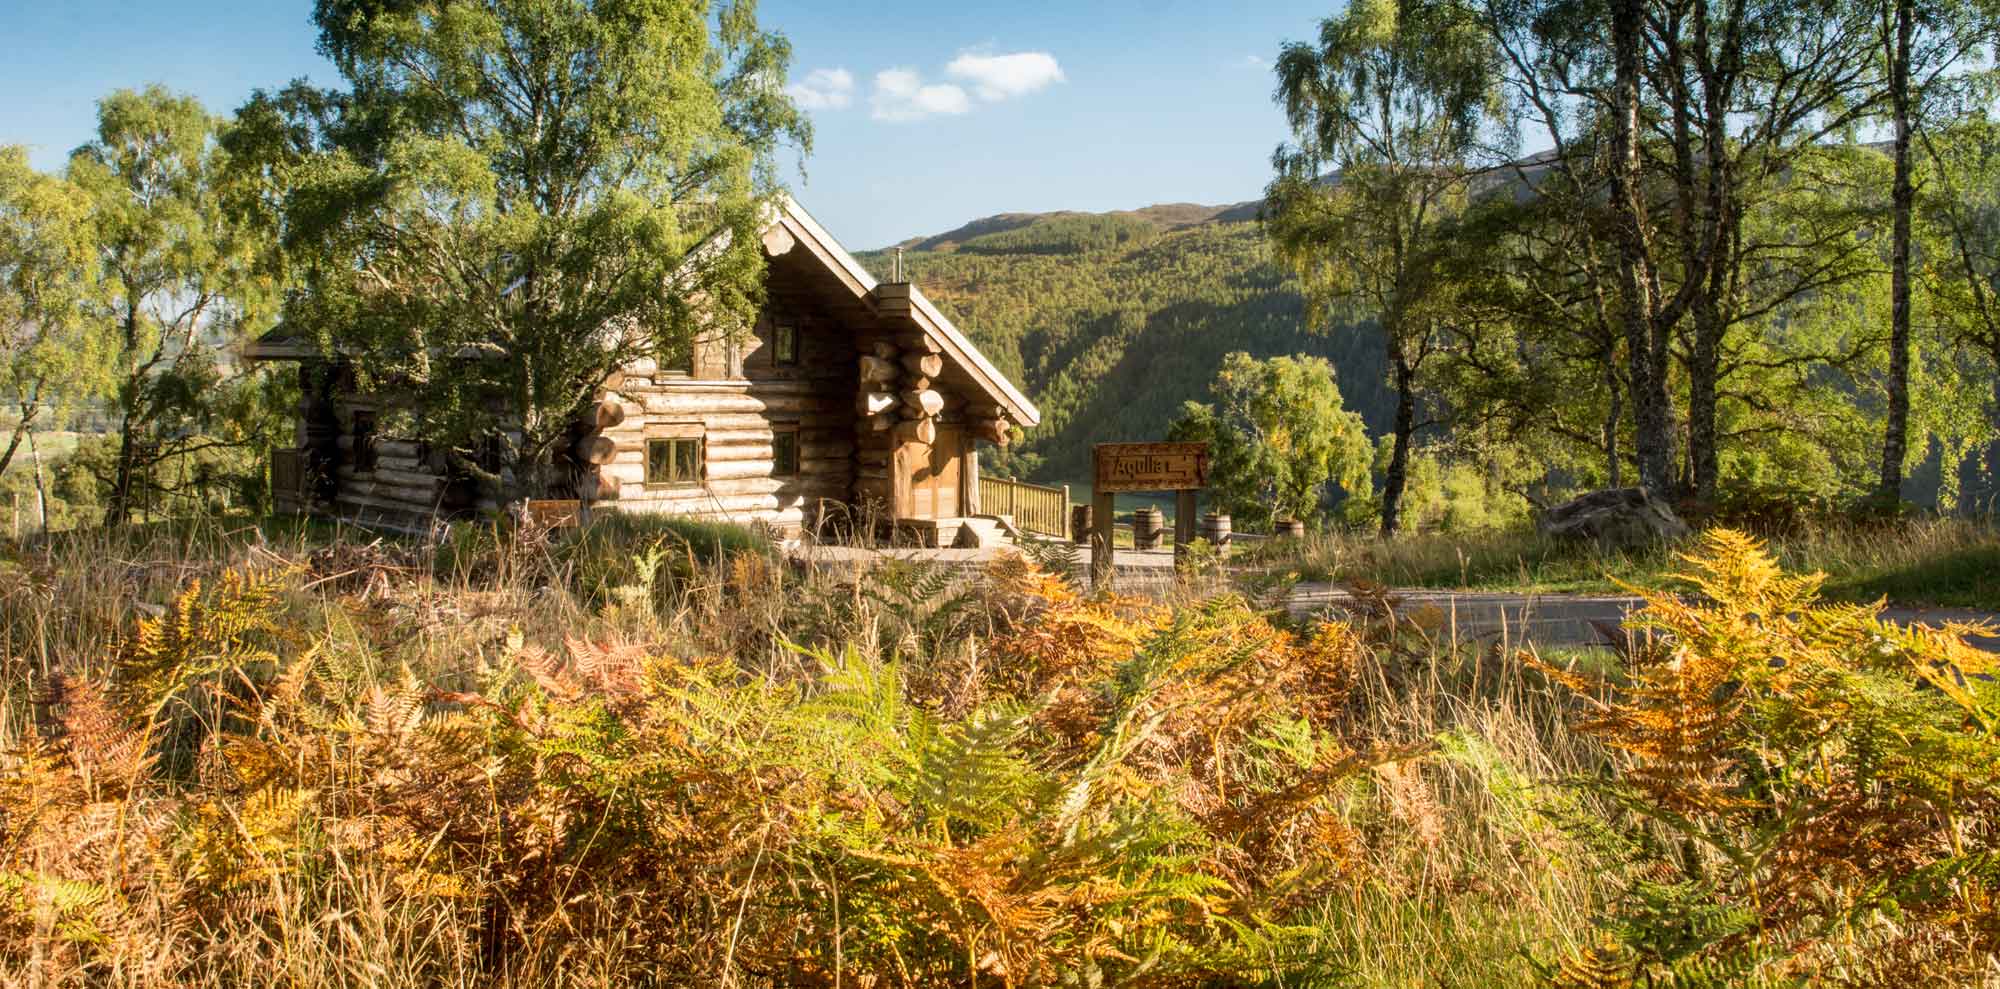 Aquila log cabin at Eagle Brae in the Scottish Highlands